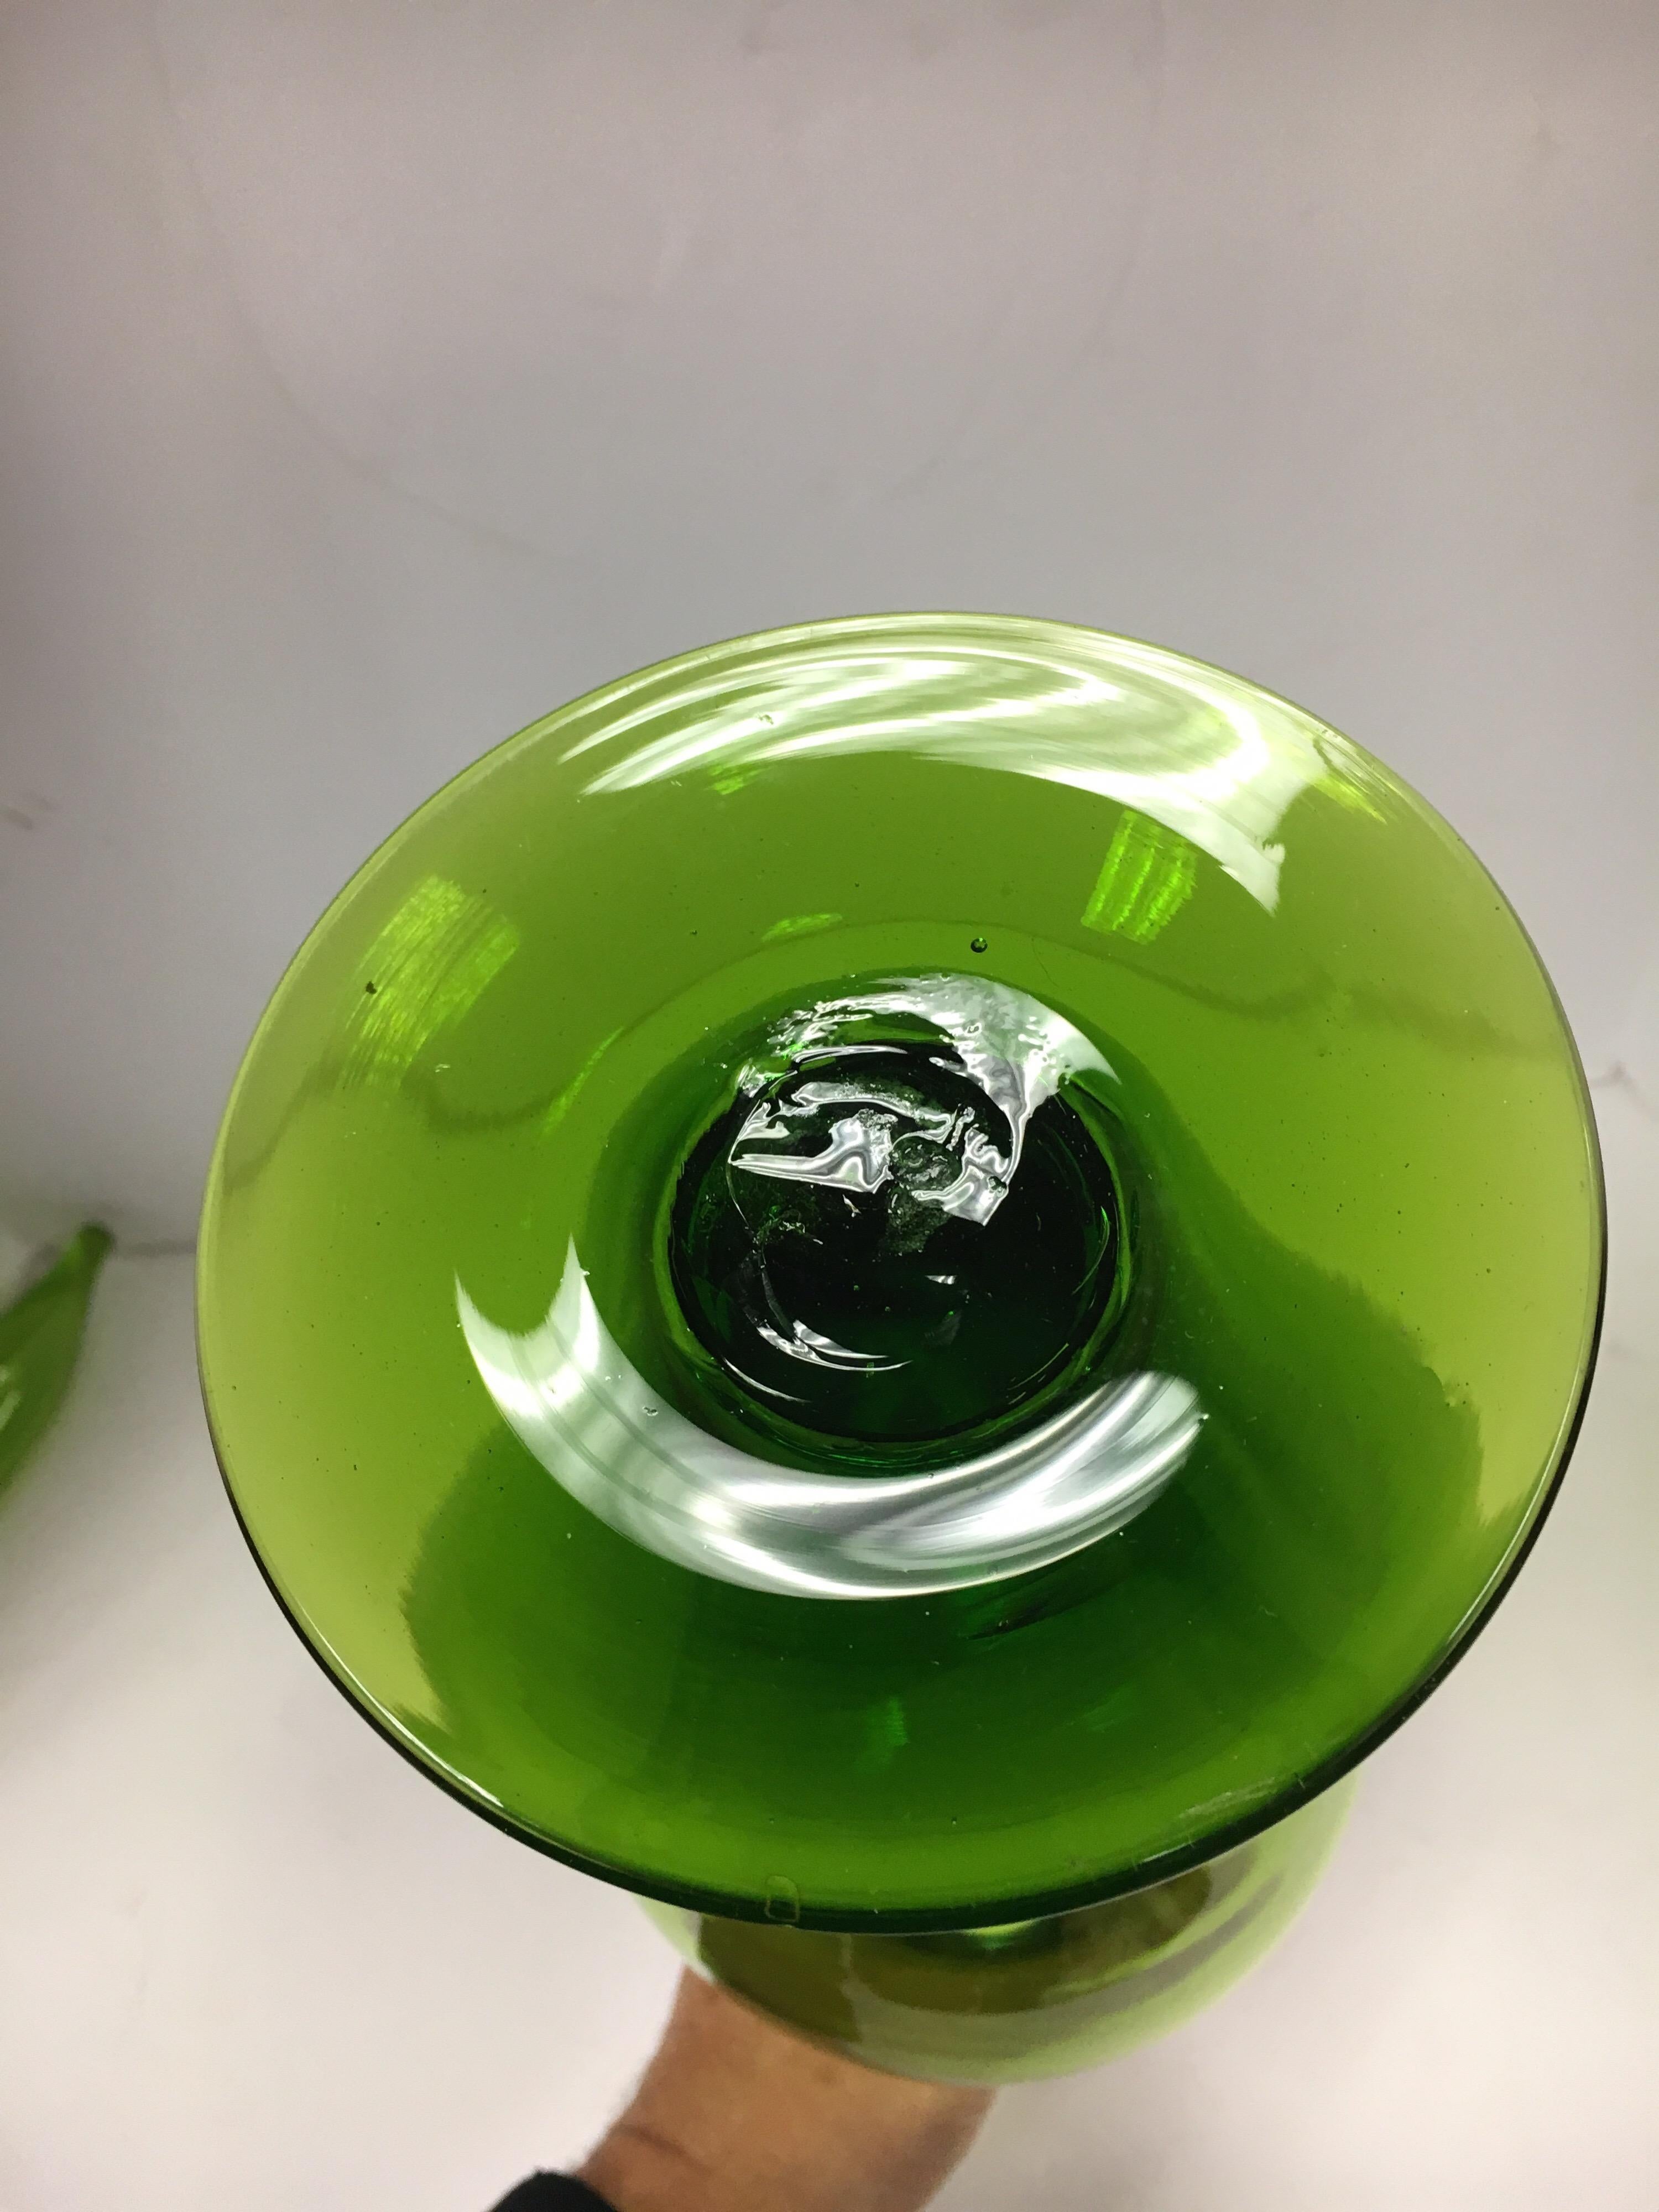 Taller Mid-Century blenko green glass decanter with matching stopper.